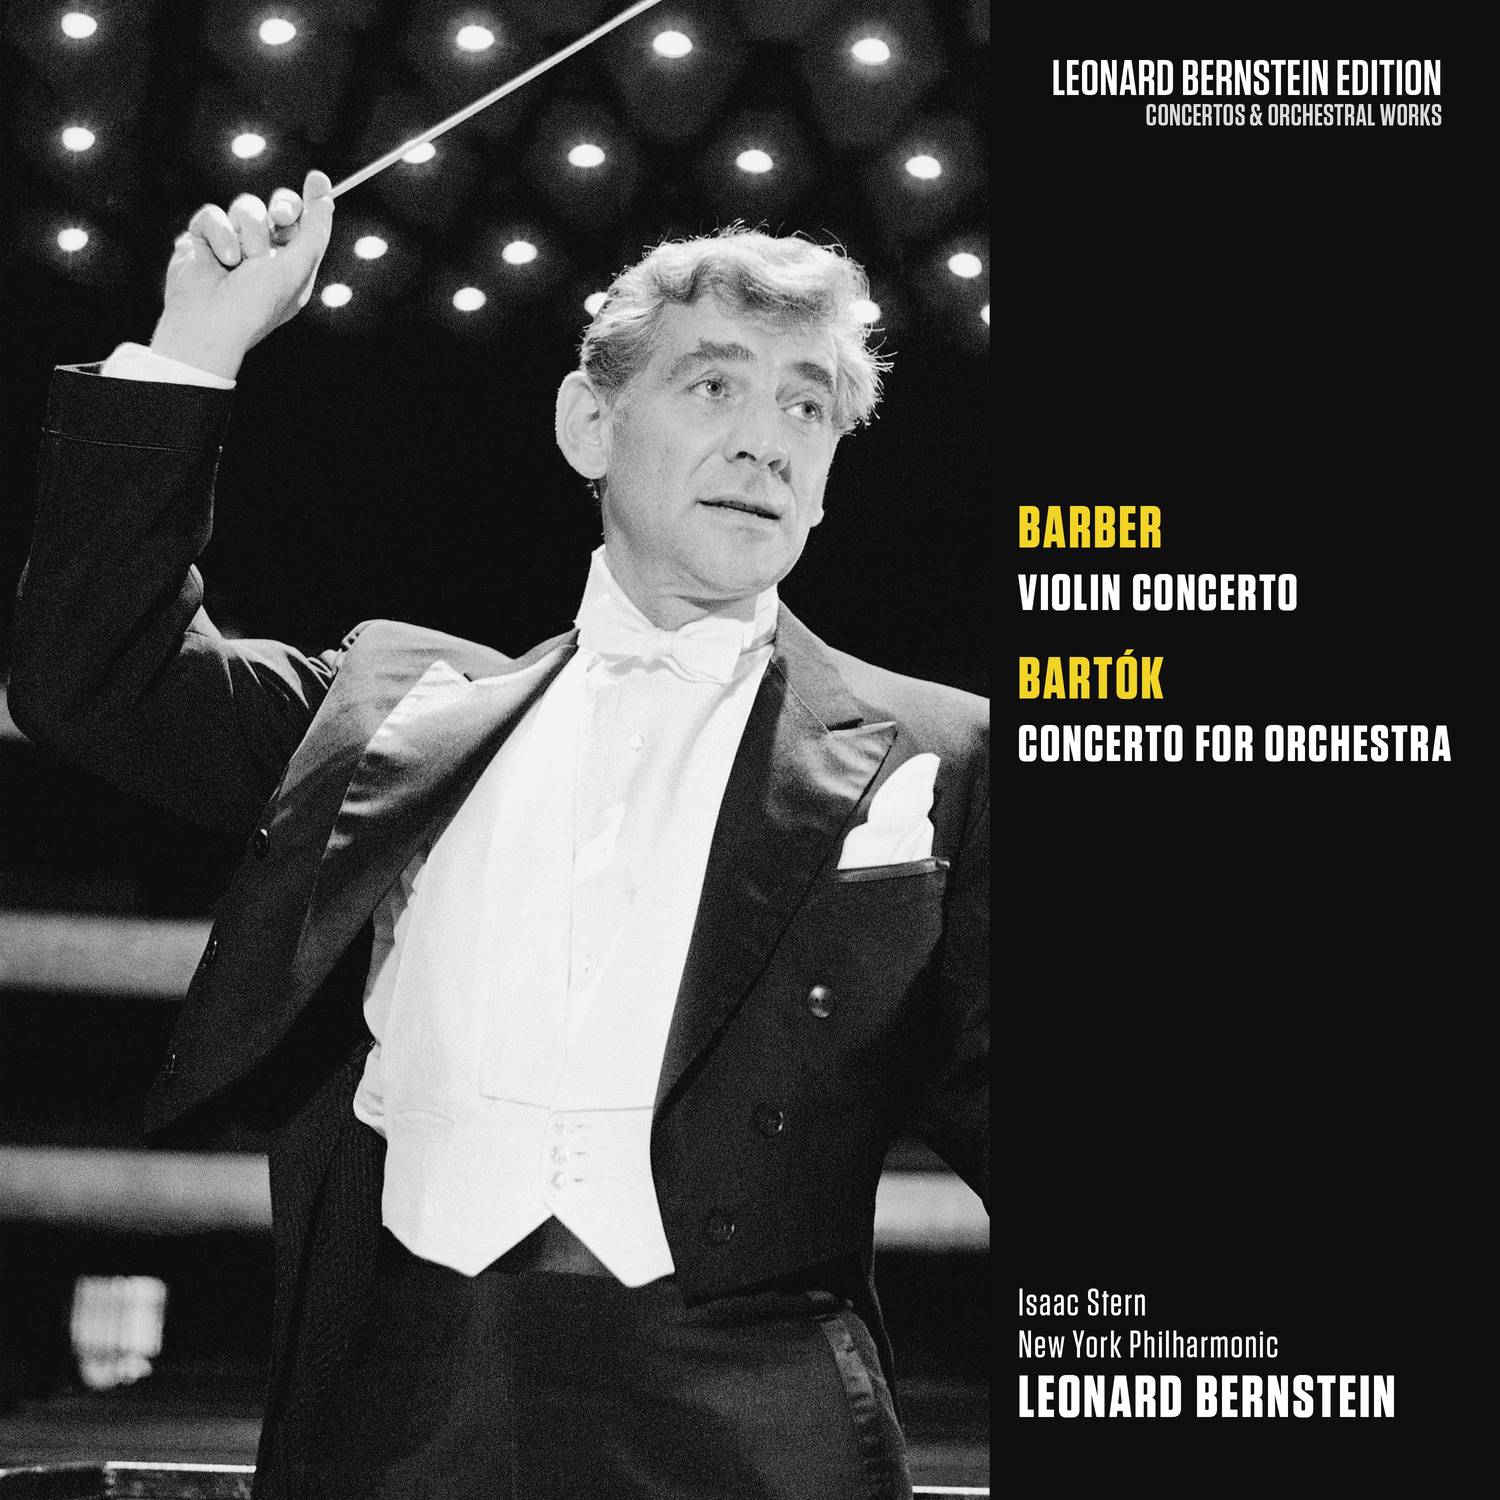 Barber: Violin Concerto, Op. 14  Barto k: Concerto for Orchestra